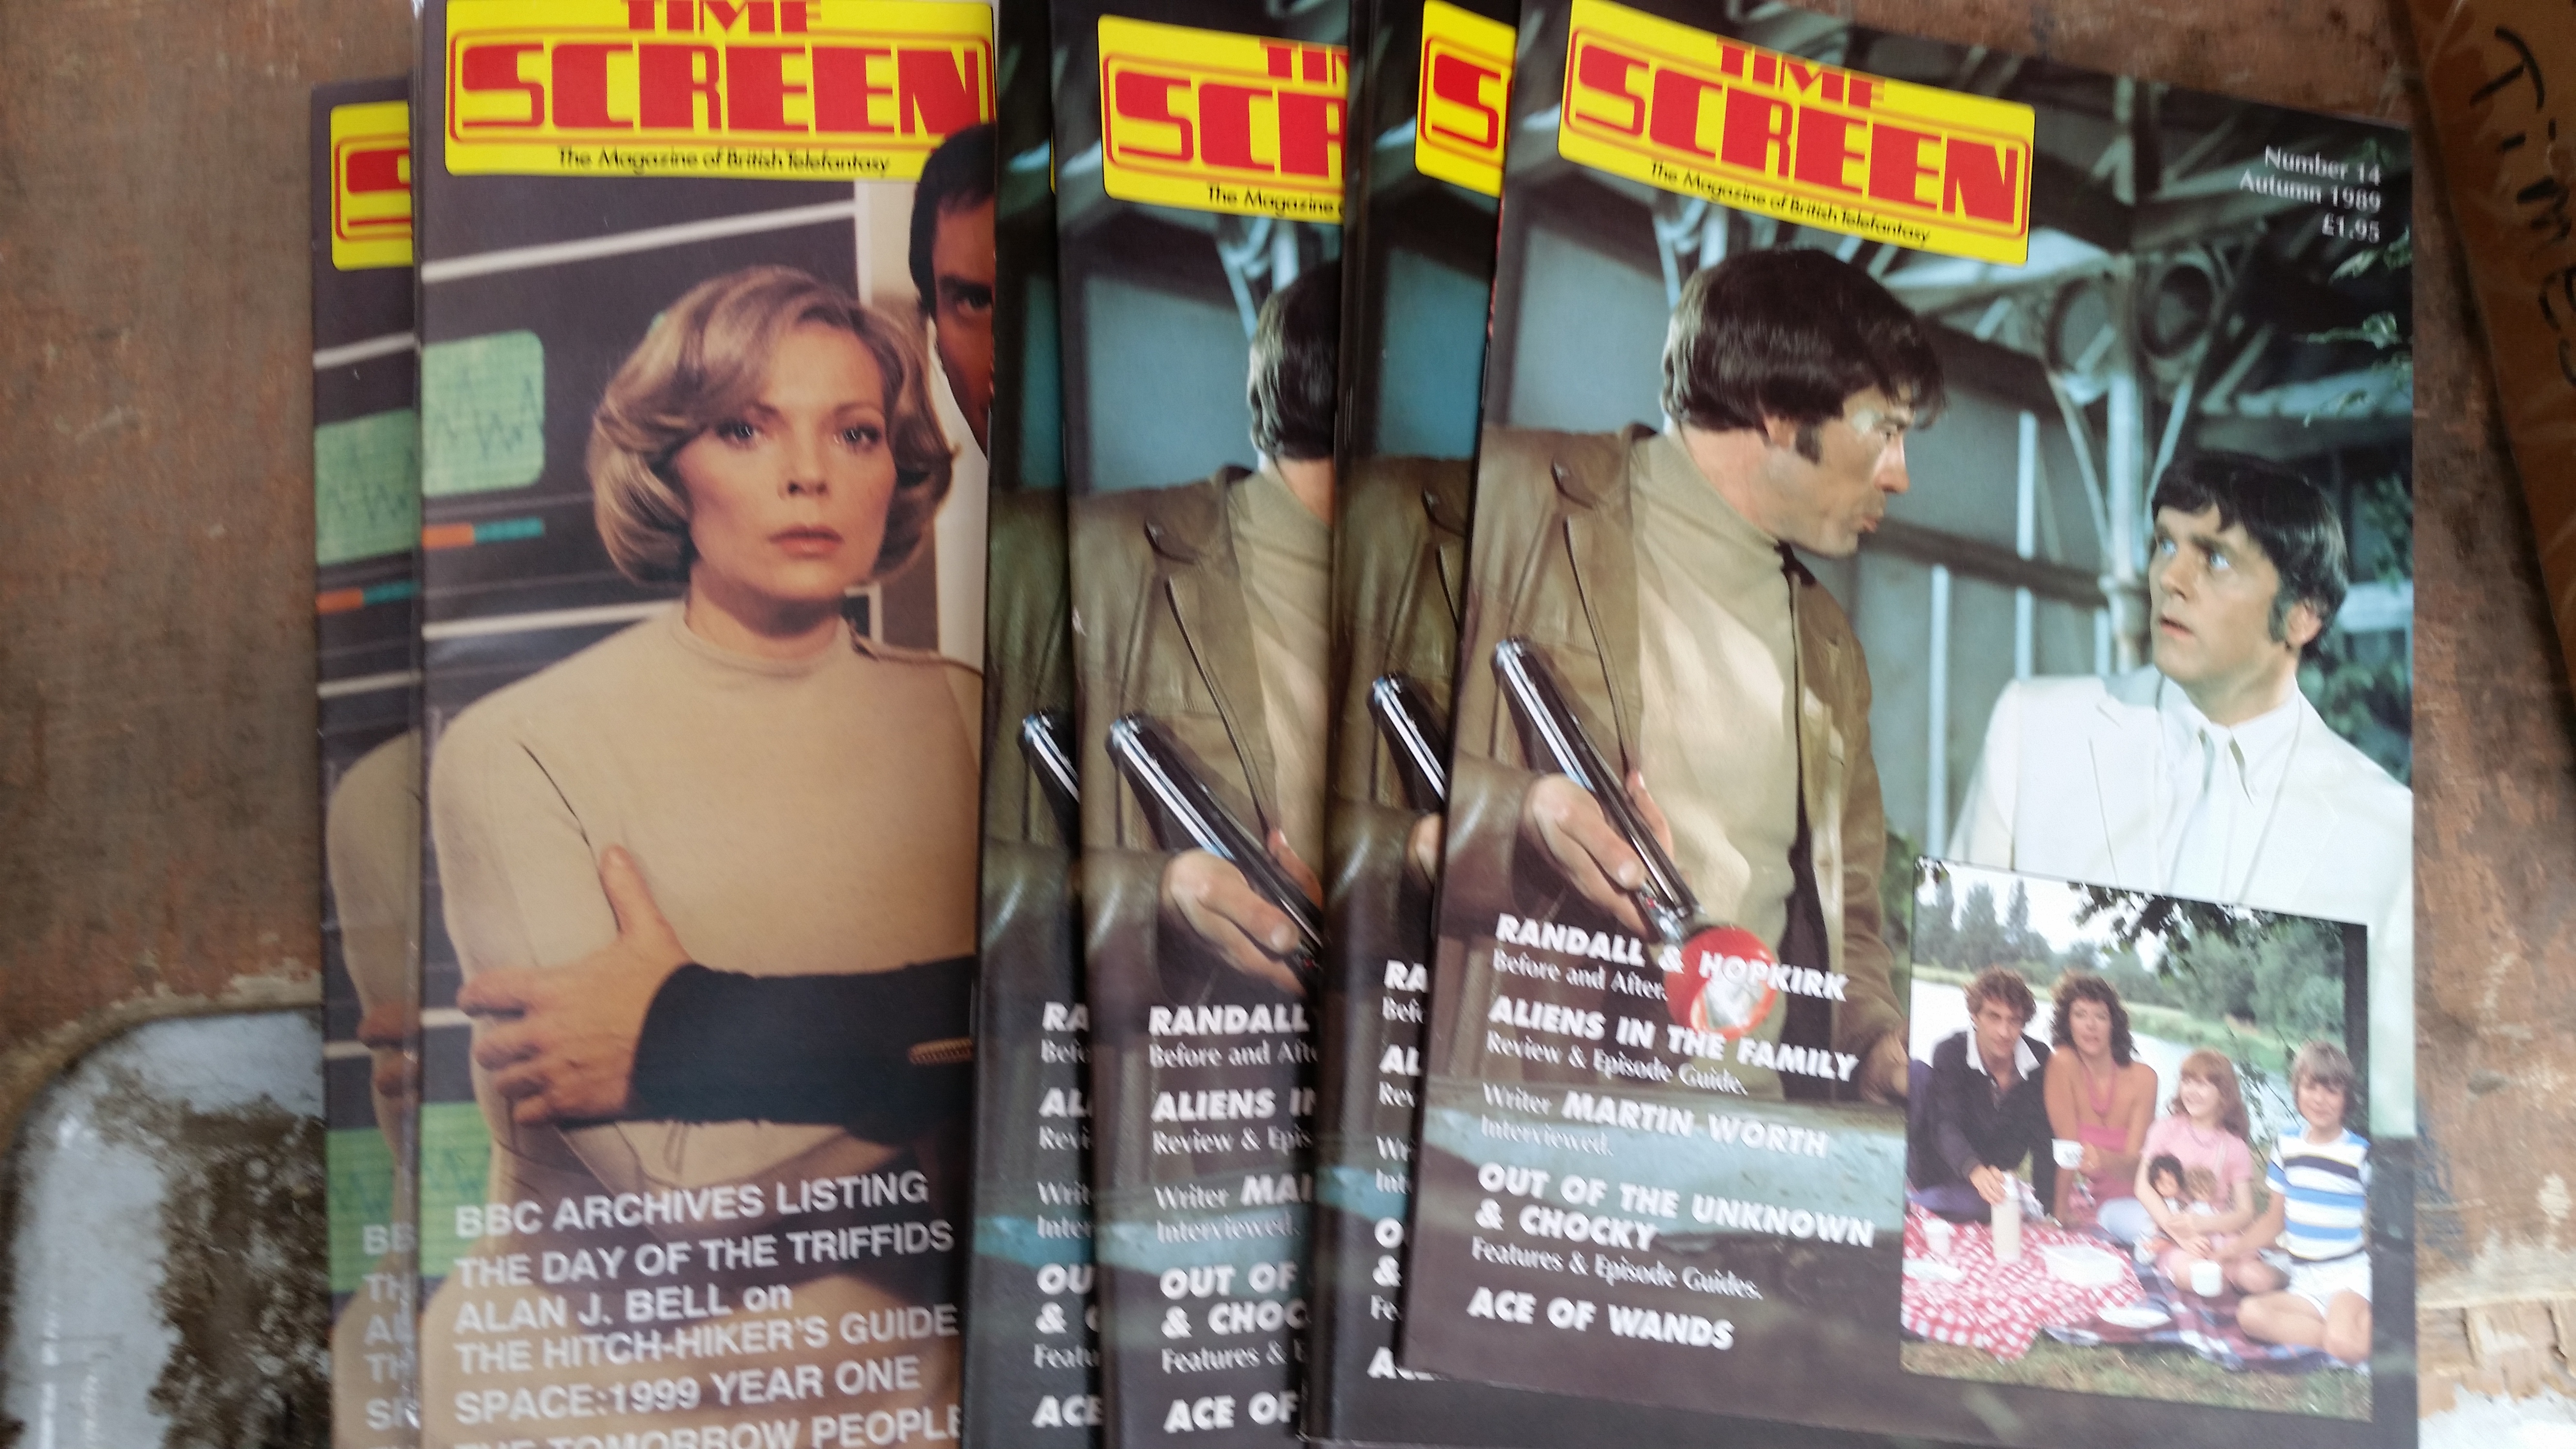 CINEMA, magazines, Time Screen - The Magazine of British Telefantasy, early 1990s, duplication (some